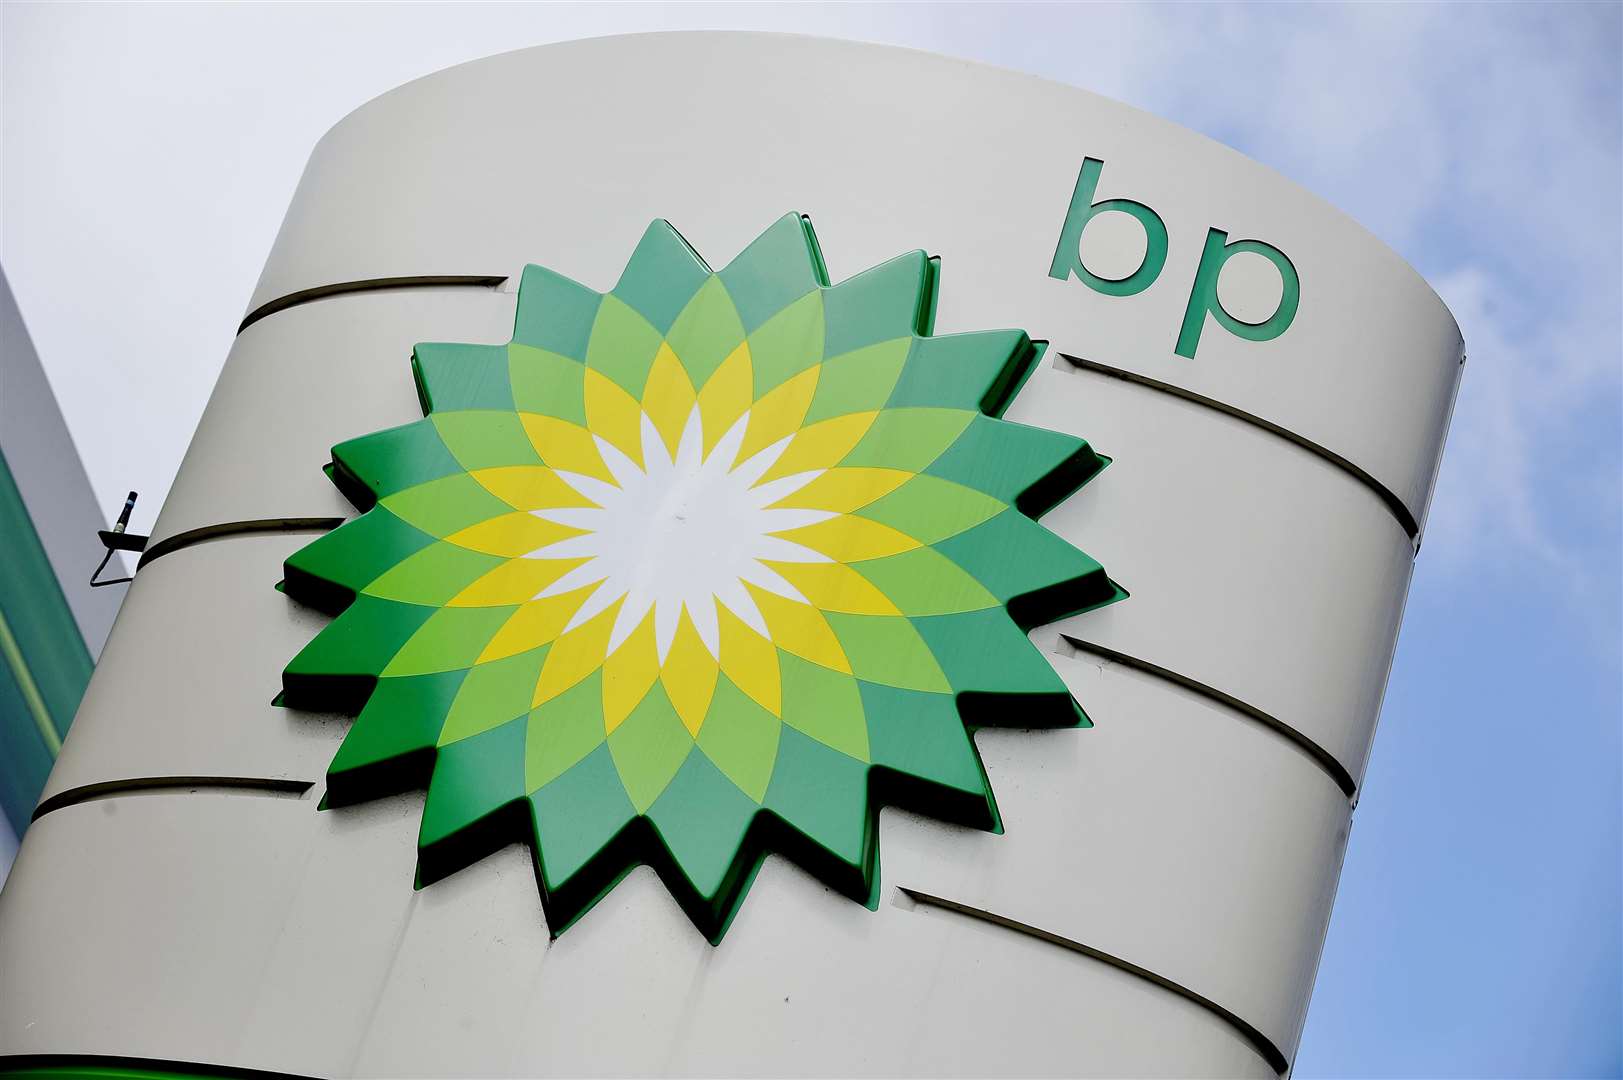 Mr Looney resigned from BP in September (Nick Ansell/PA)